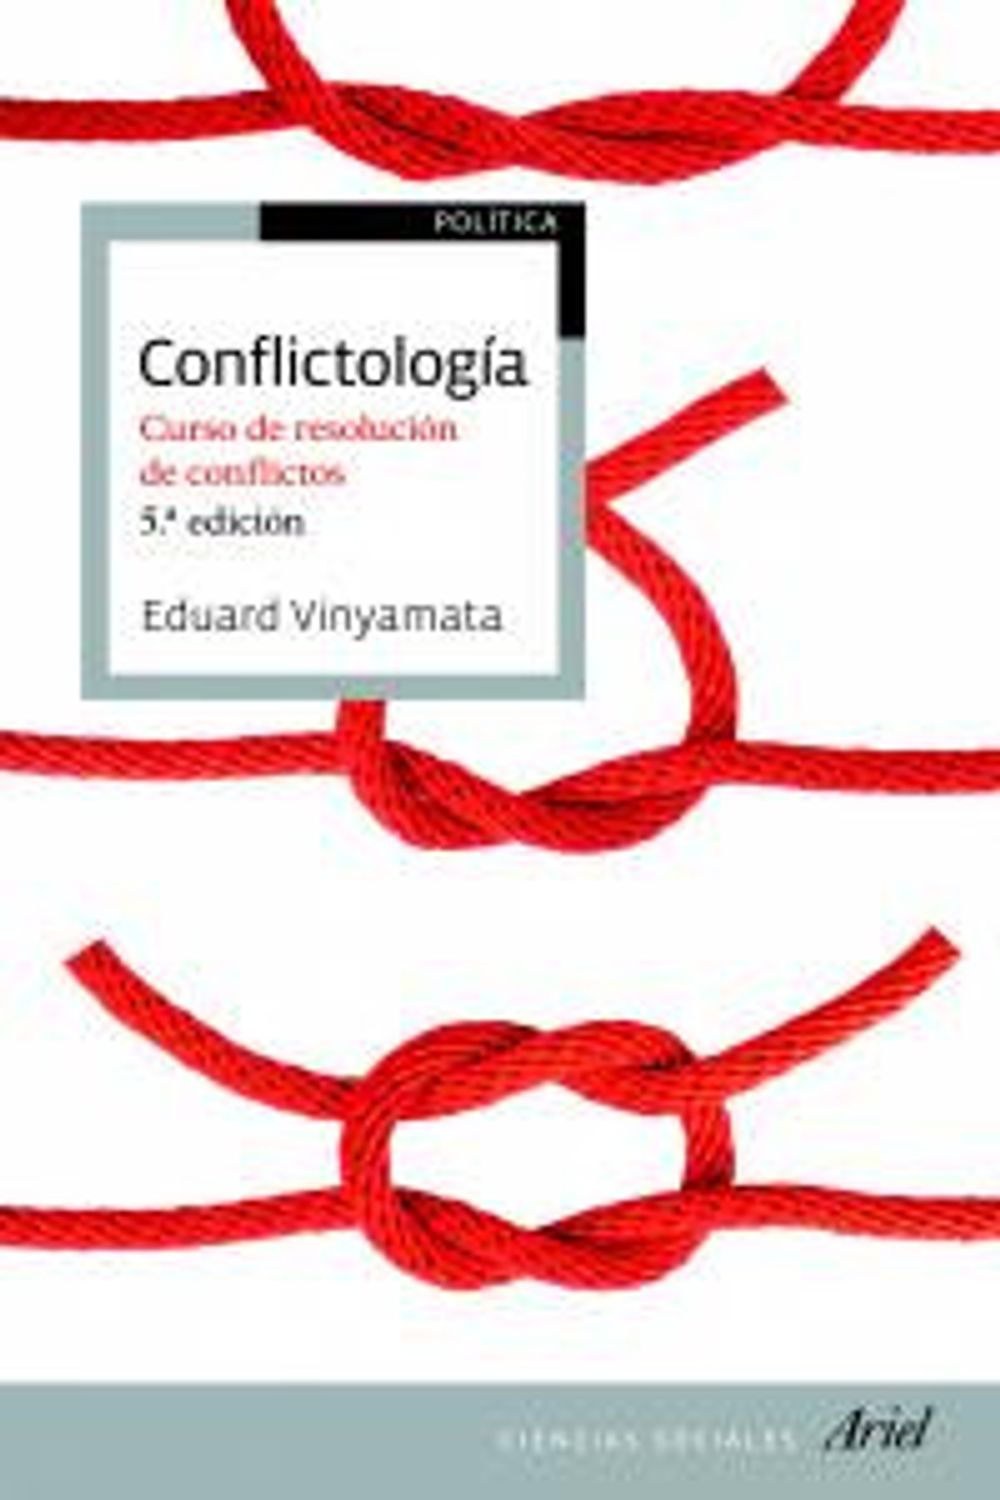 Conflictologia